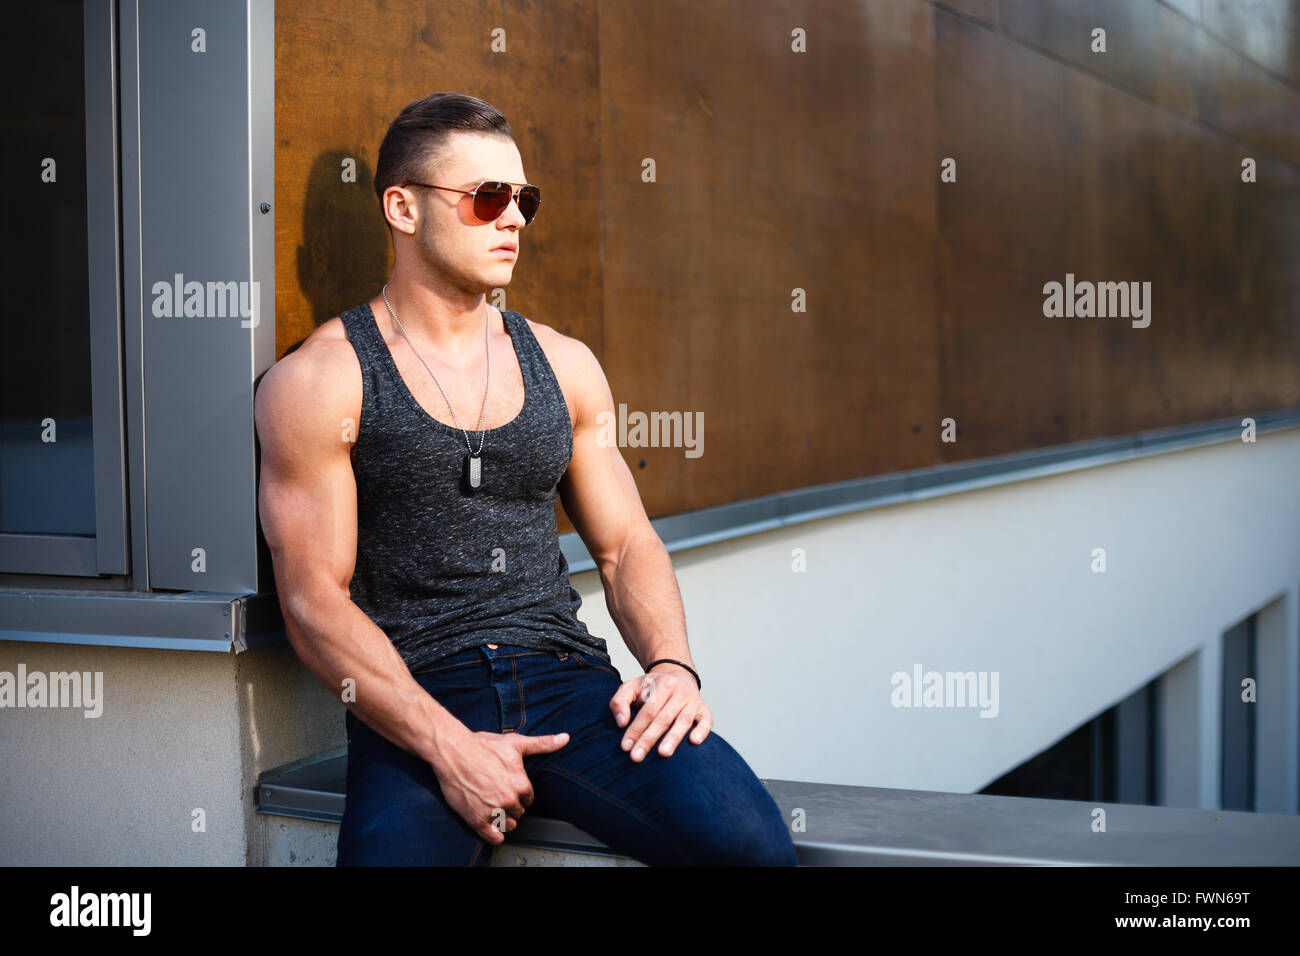 Muscular man posing near building Stock Photo